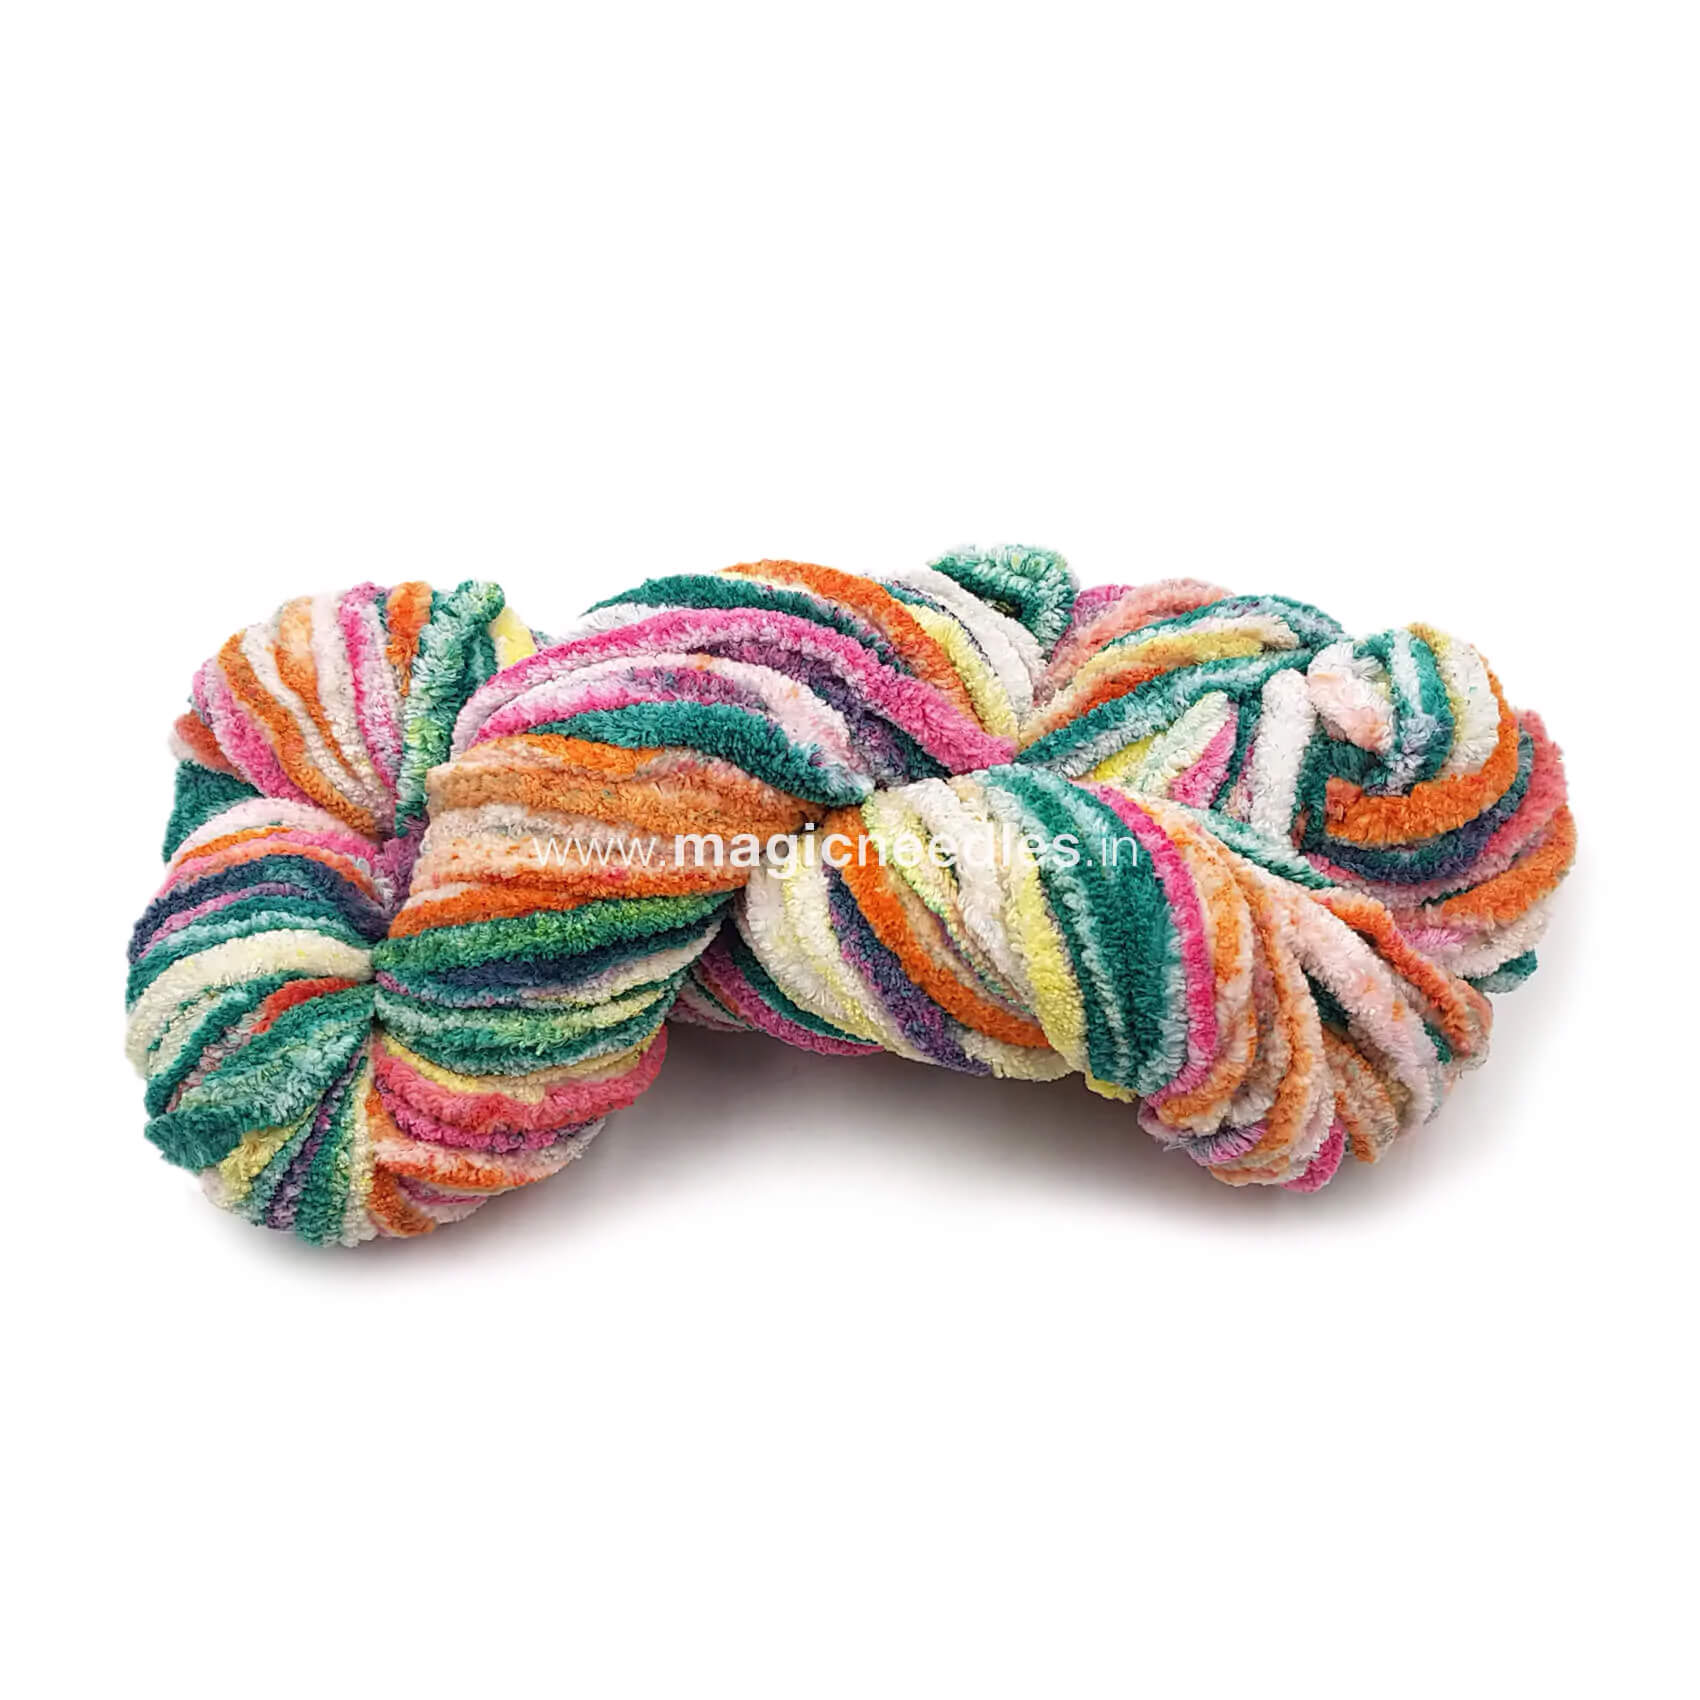 Velvety Yarn - Multi Color 939801 939804